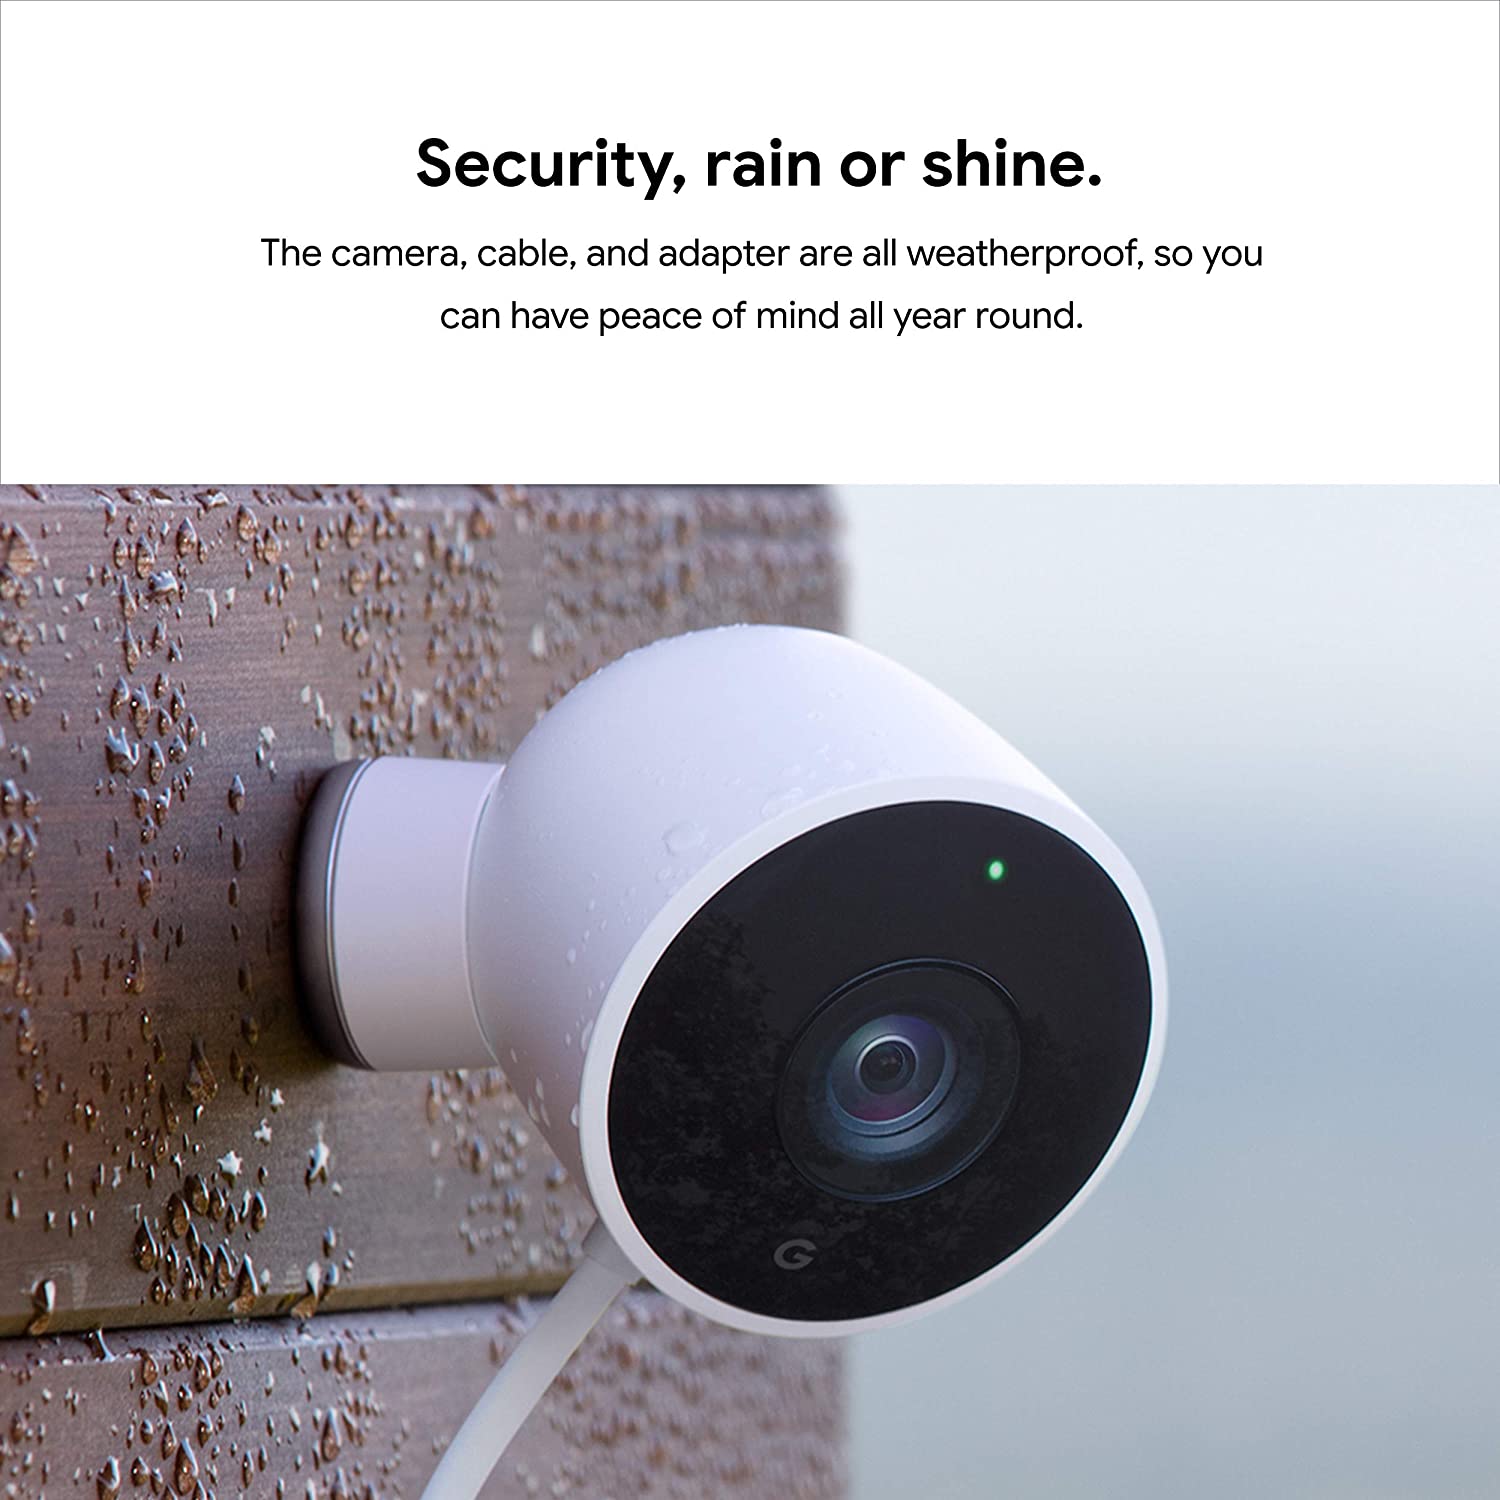 Review of Nest Cam Outdoor Security Camera